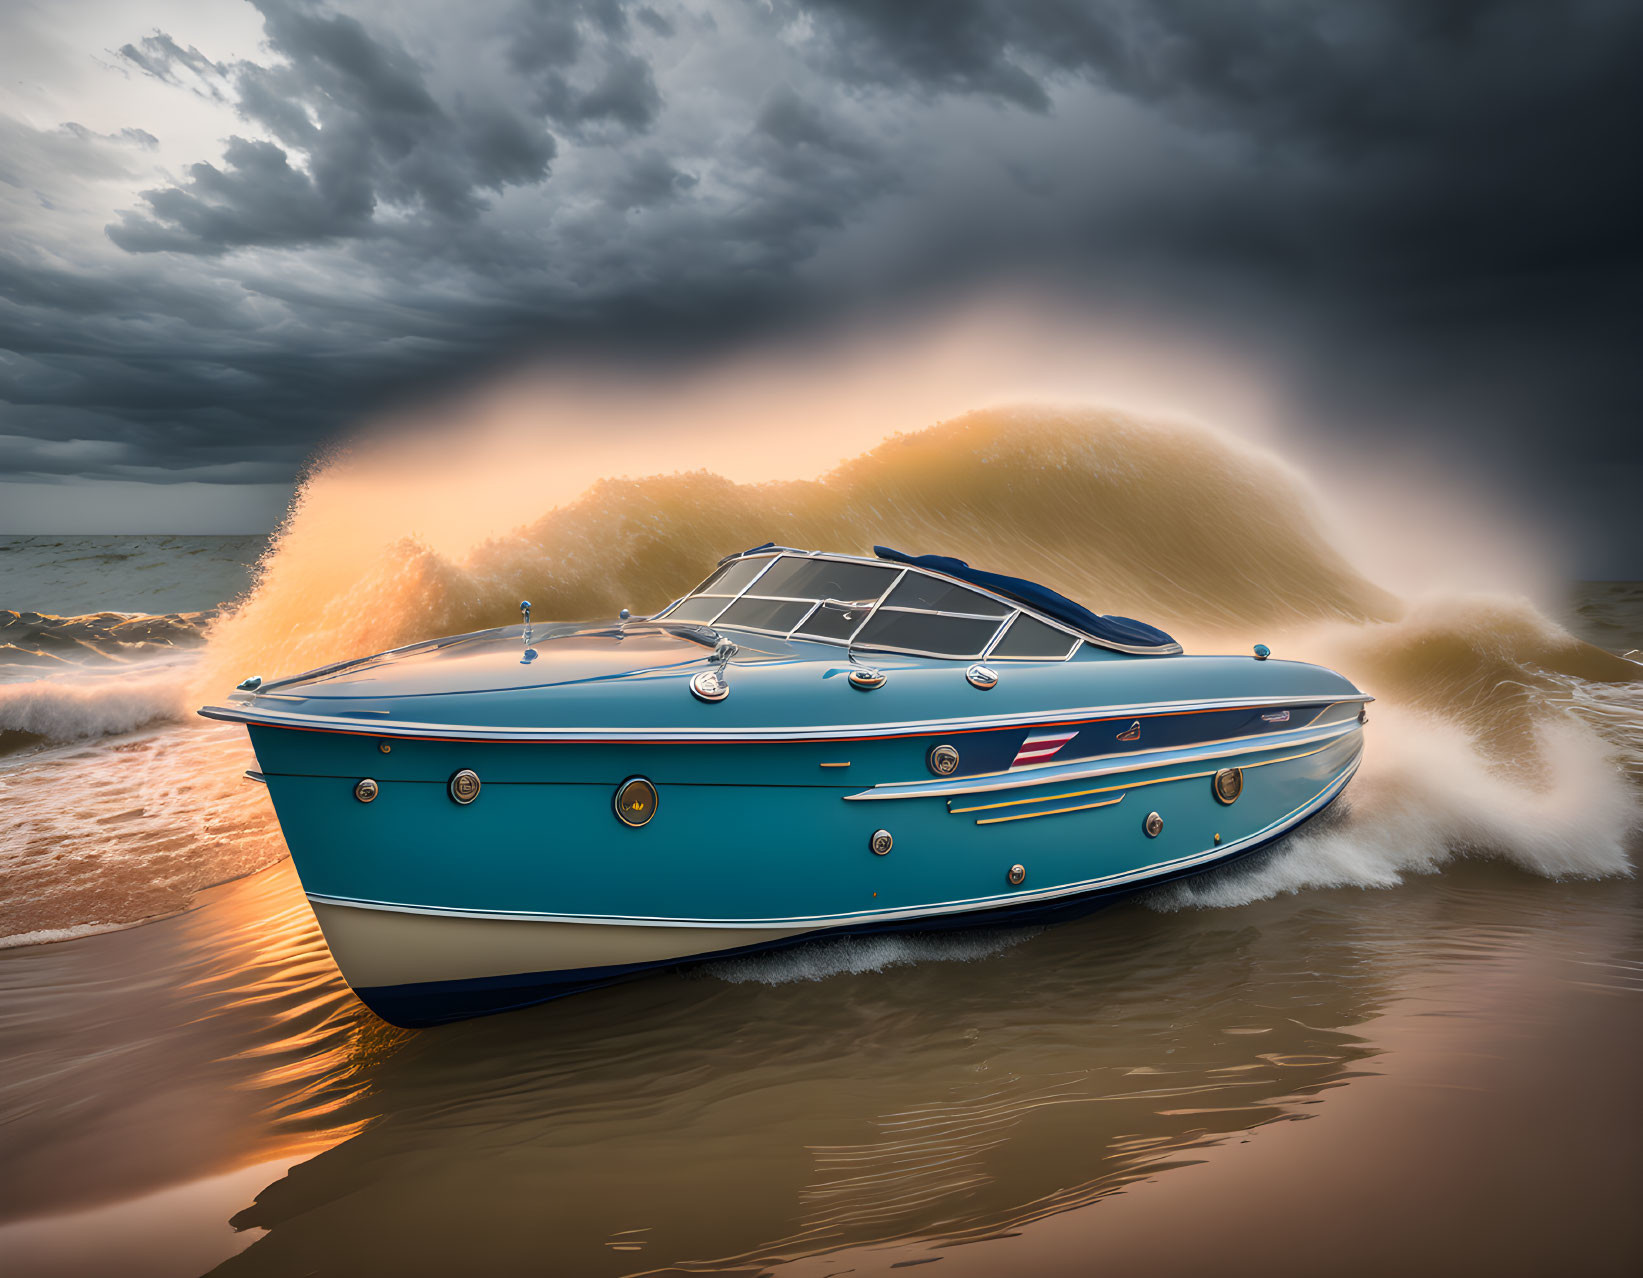 Blue glossy motorboat speeding on water under dramatic sky